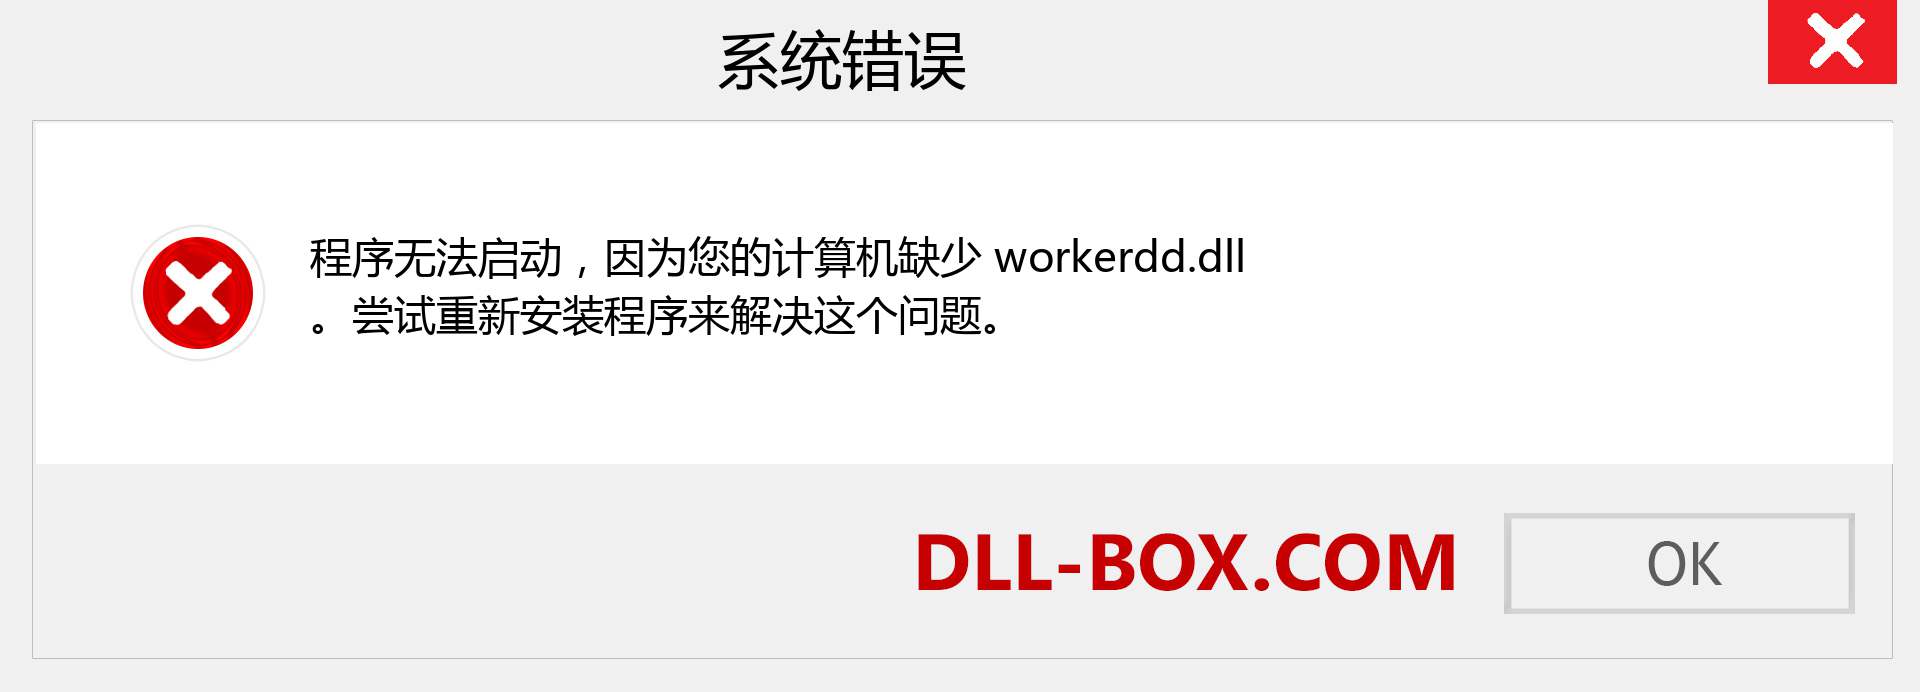 workerdd.dll 文件丢失？。 适用于 Windows 7、8、10 的下载 - 修复 Windows、照片、图像上的 workerdd dll 丢失错误